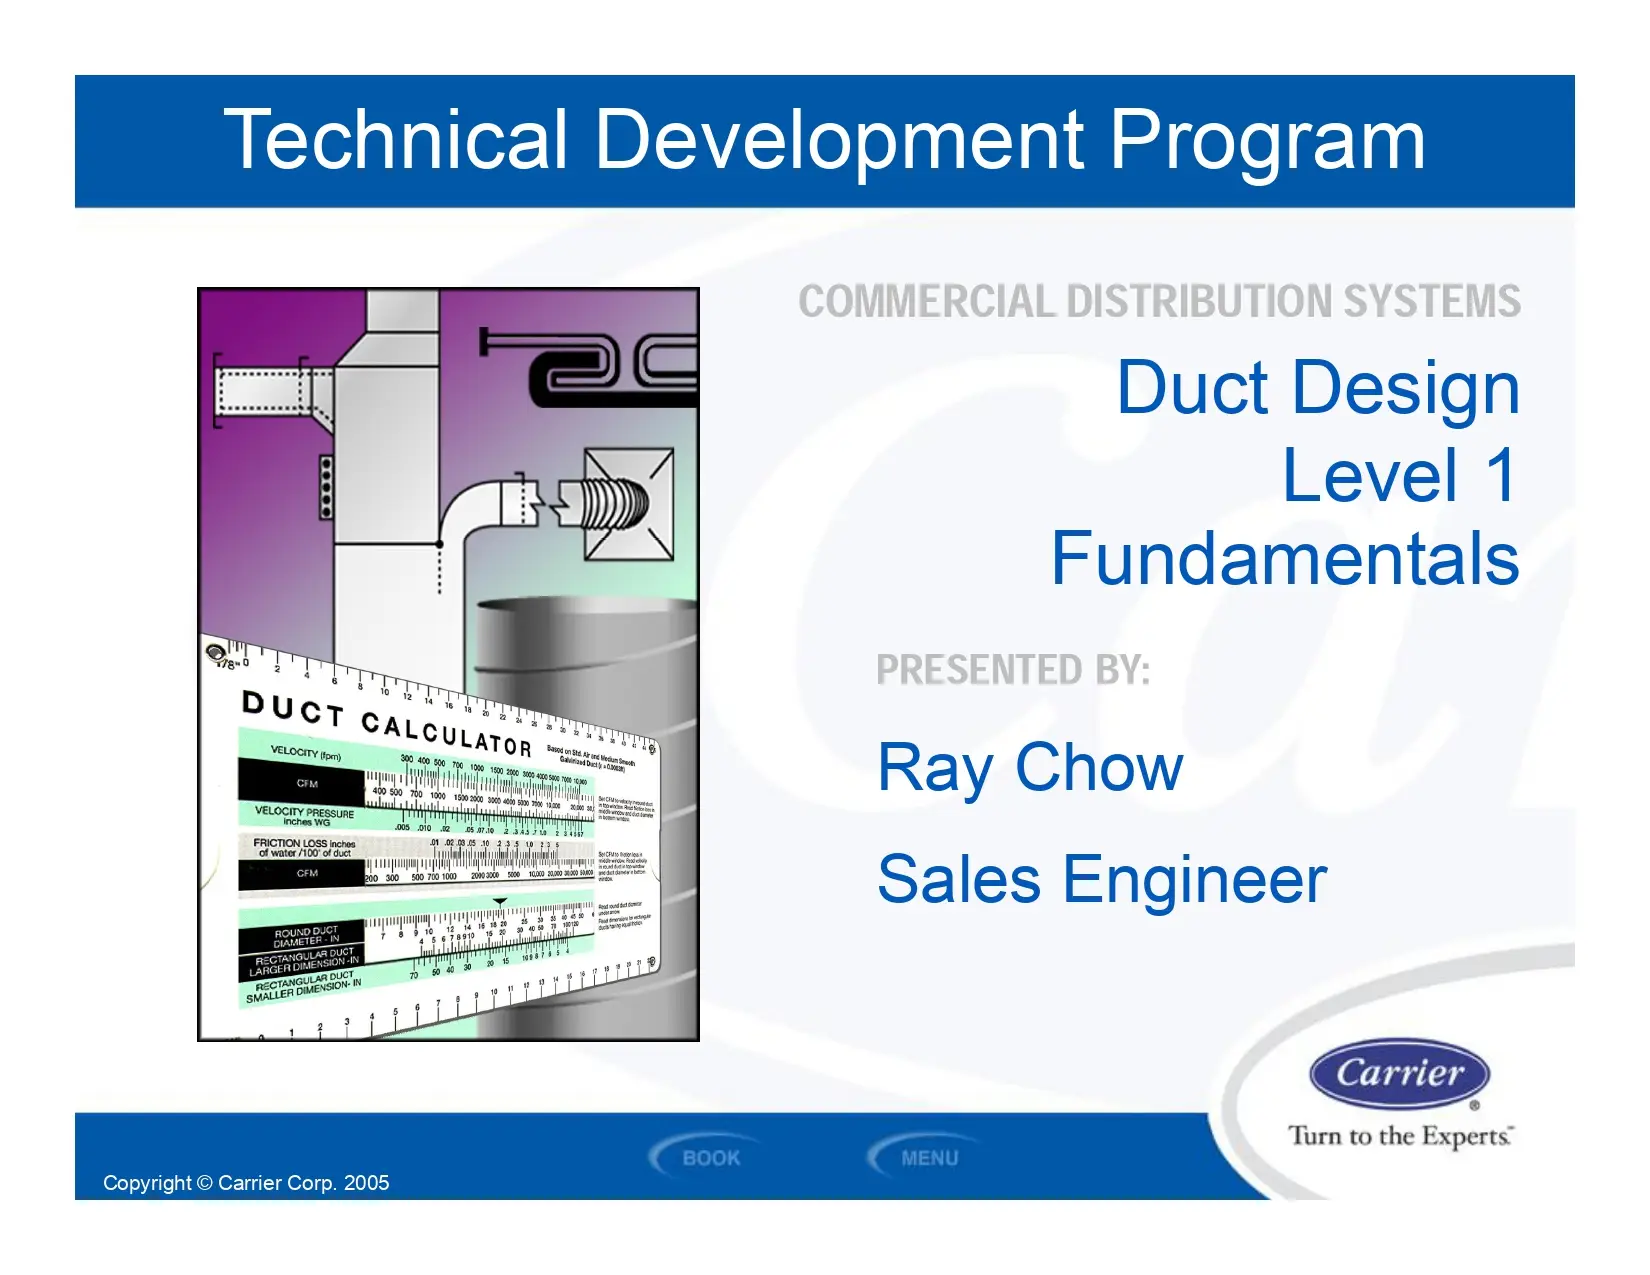 Technical Development Program (Duct Design Level 1 Fundamentals)